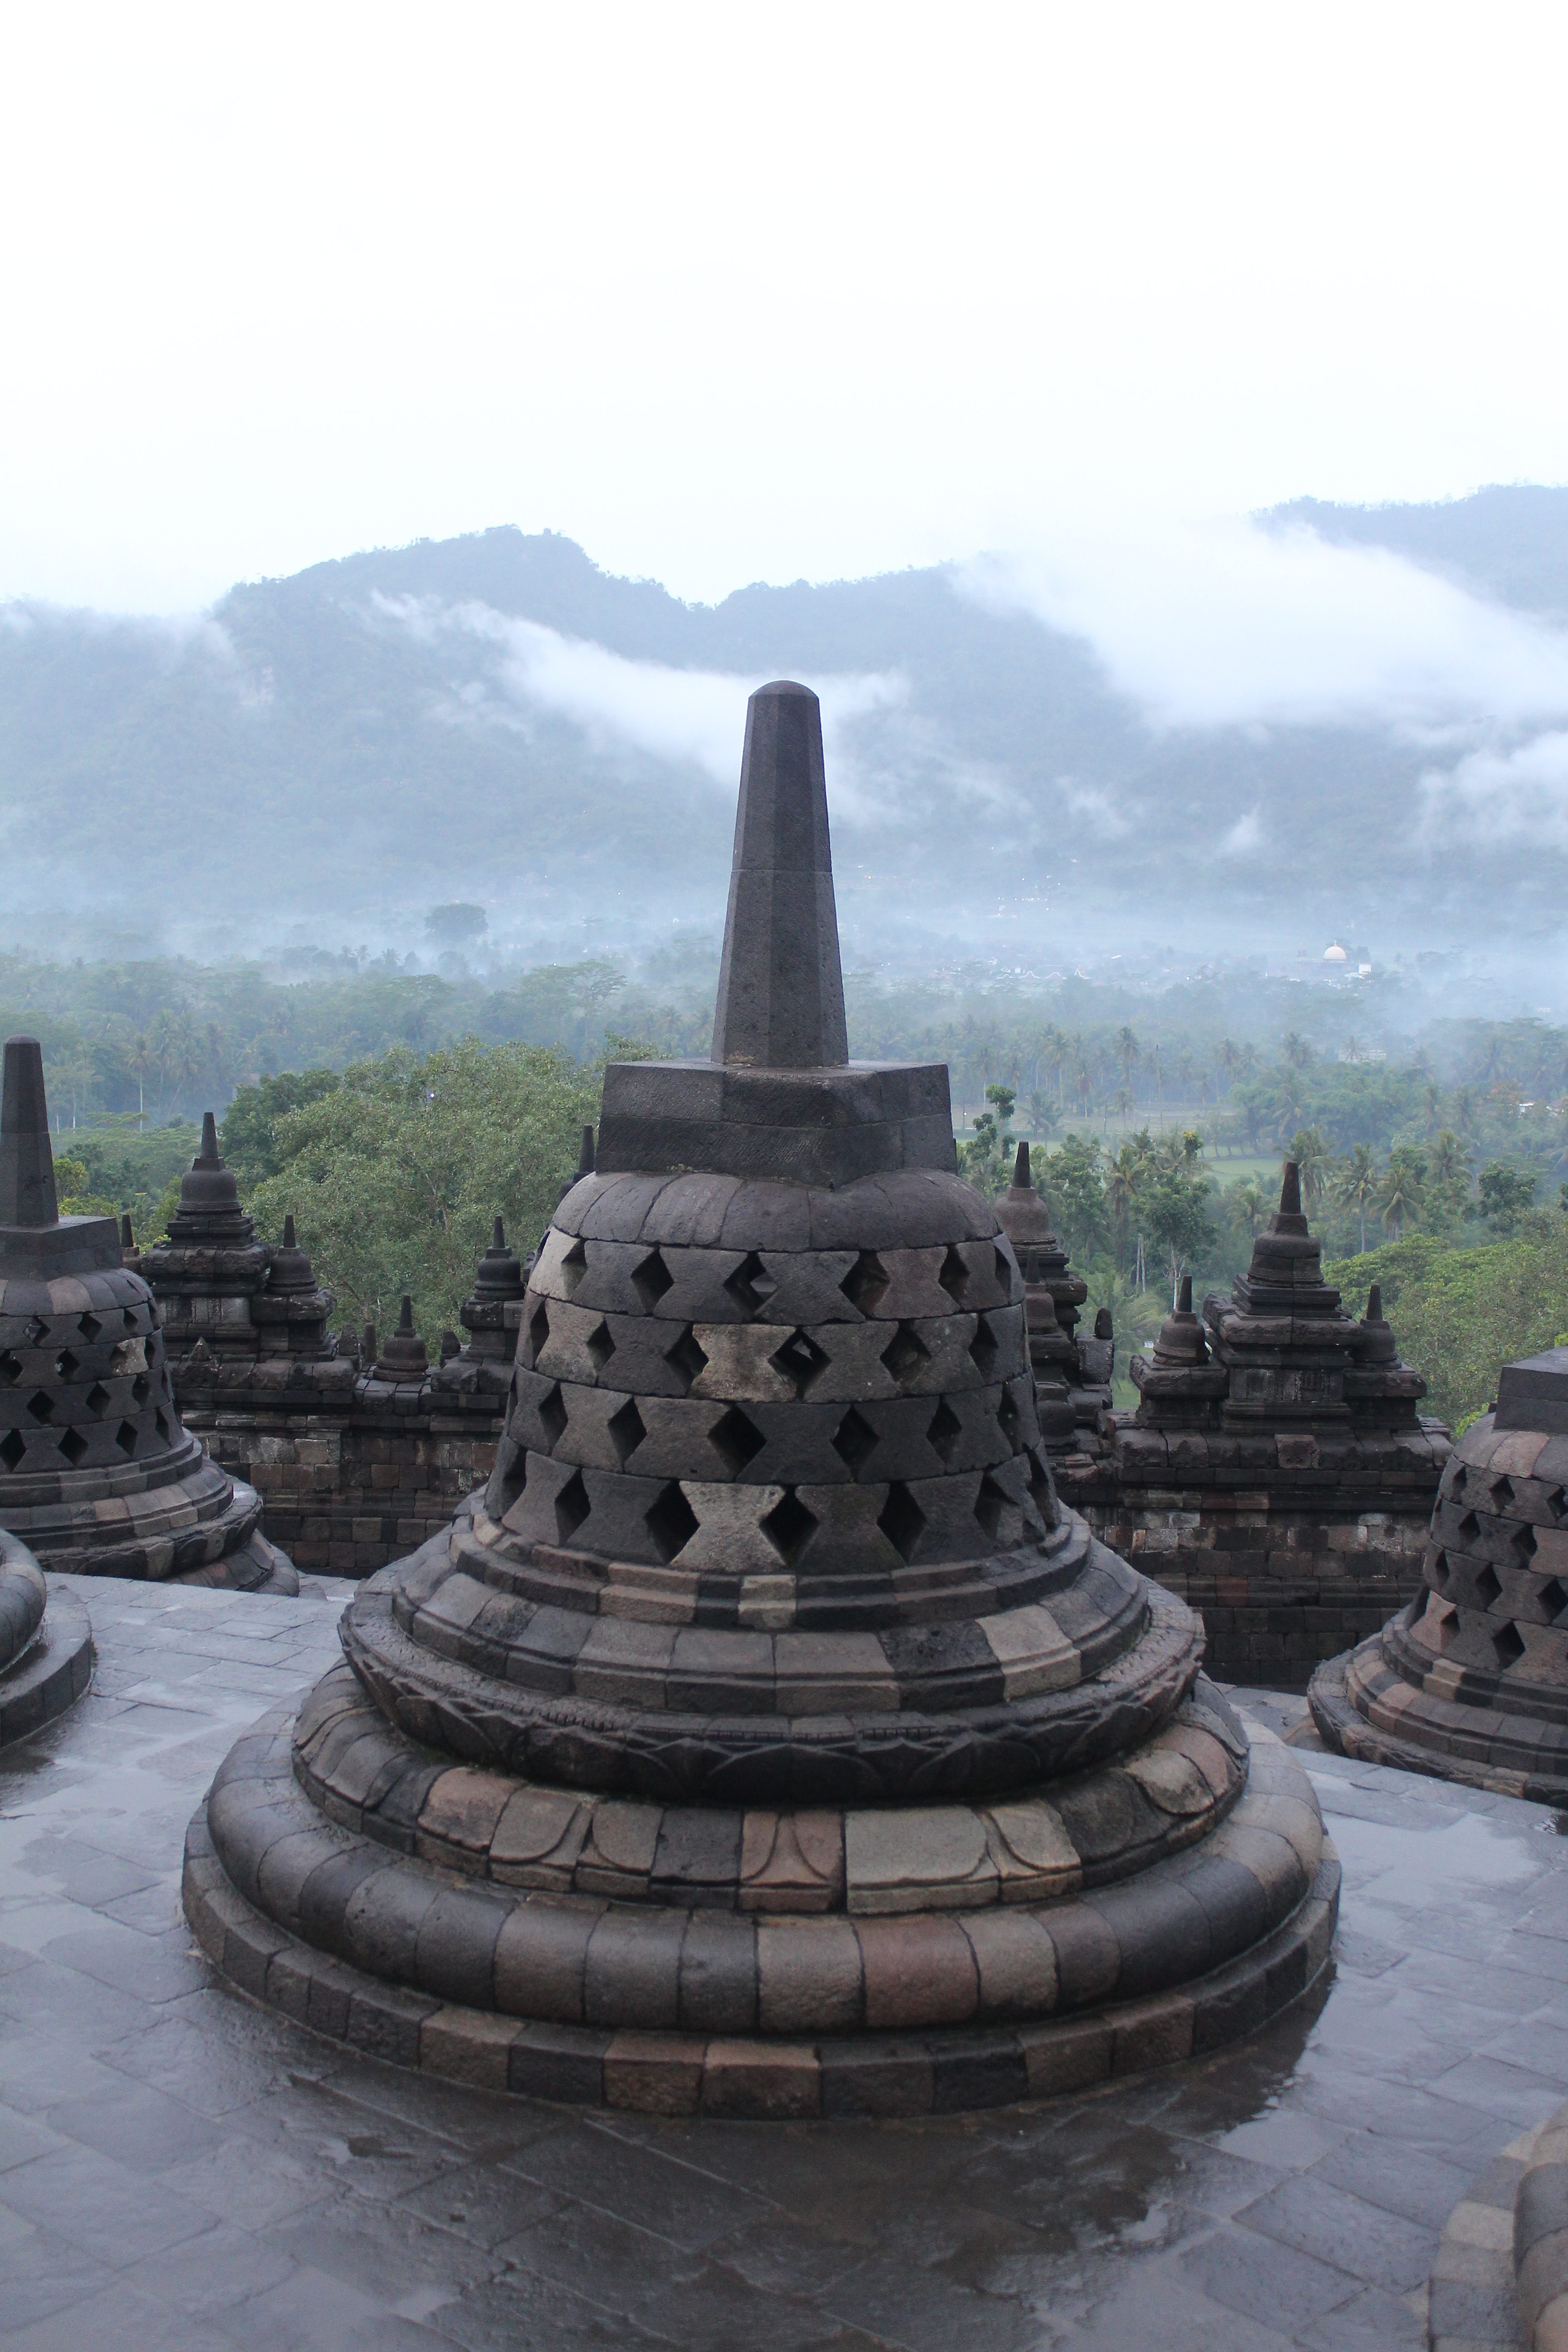 Series of stone stupas high above a lush landscape